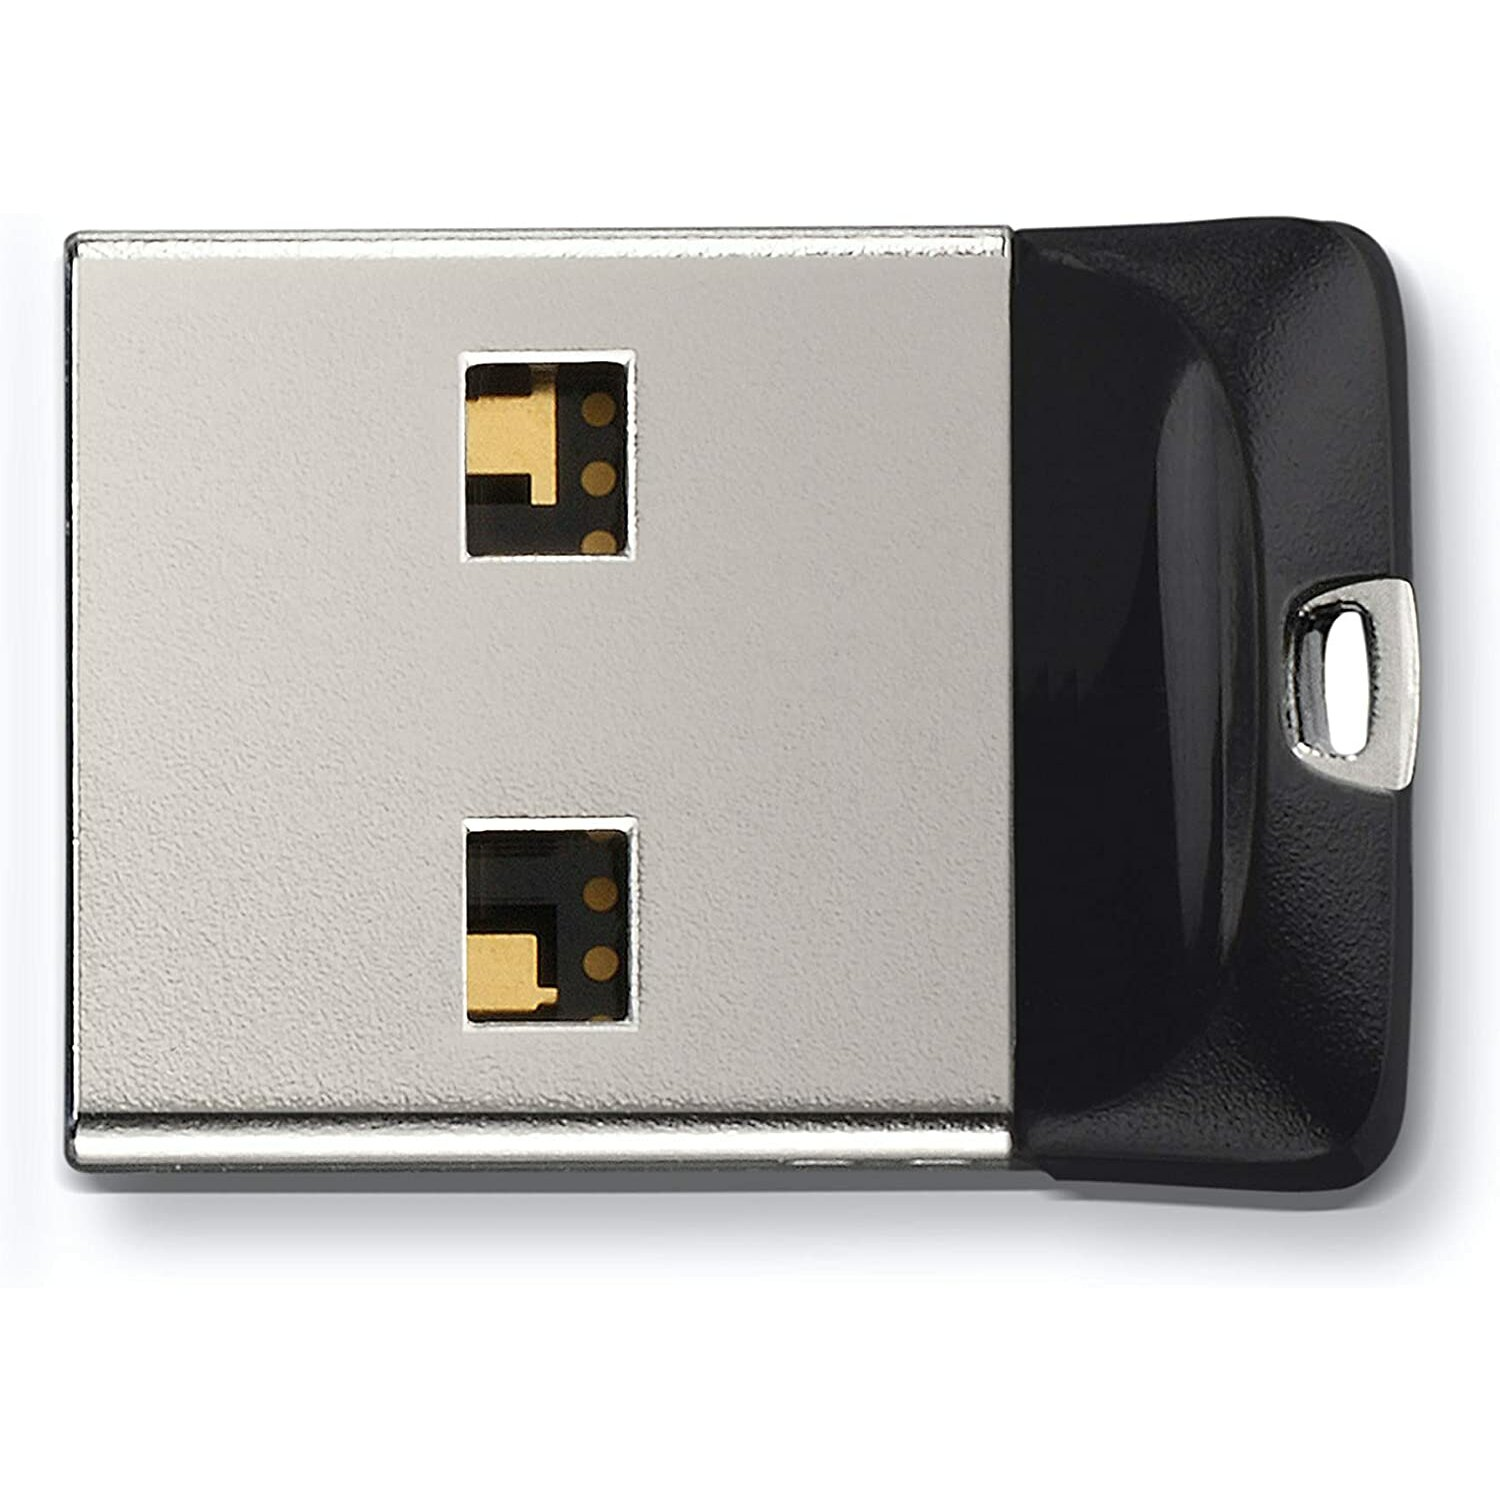 SANDISK Cruzer Fit USB Stick (Schwarz, GB) 32